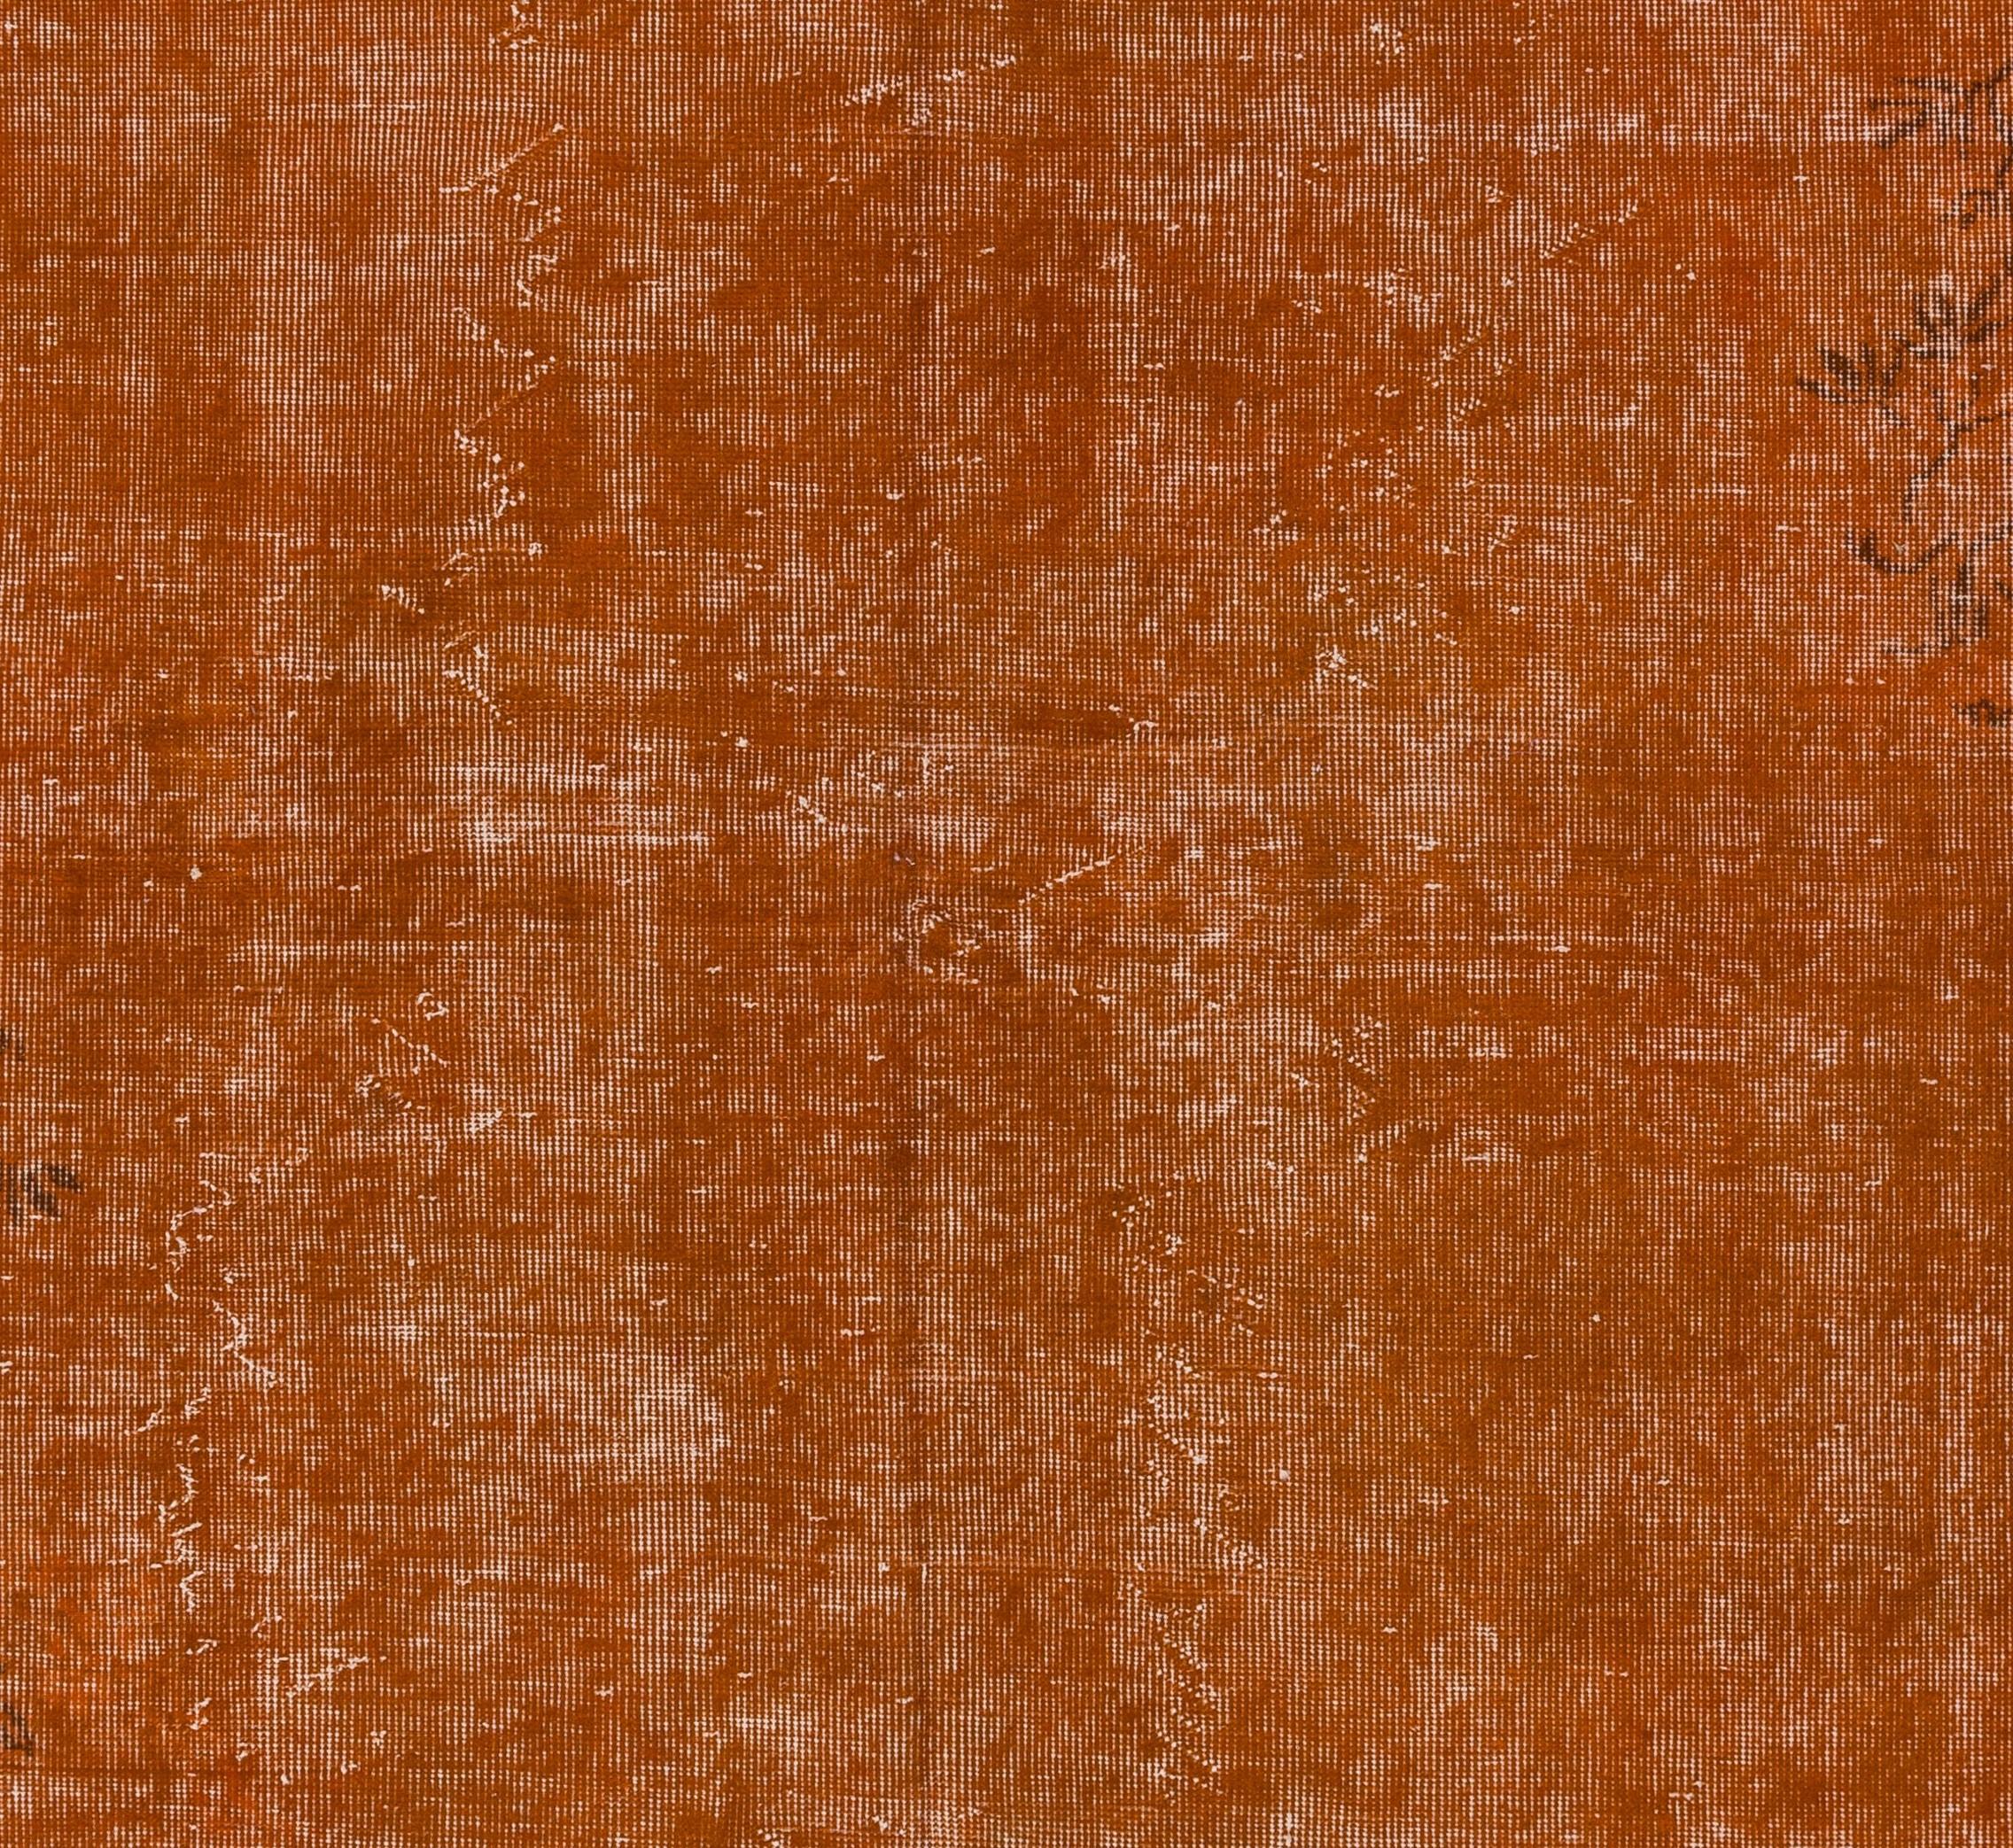 Turkish 6x9 Ft Distressed Vintage Rug Overdyed in Burnt Orange, Woolen Floor Covering